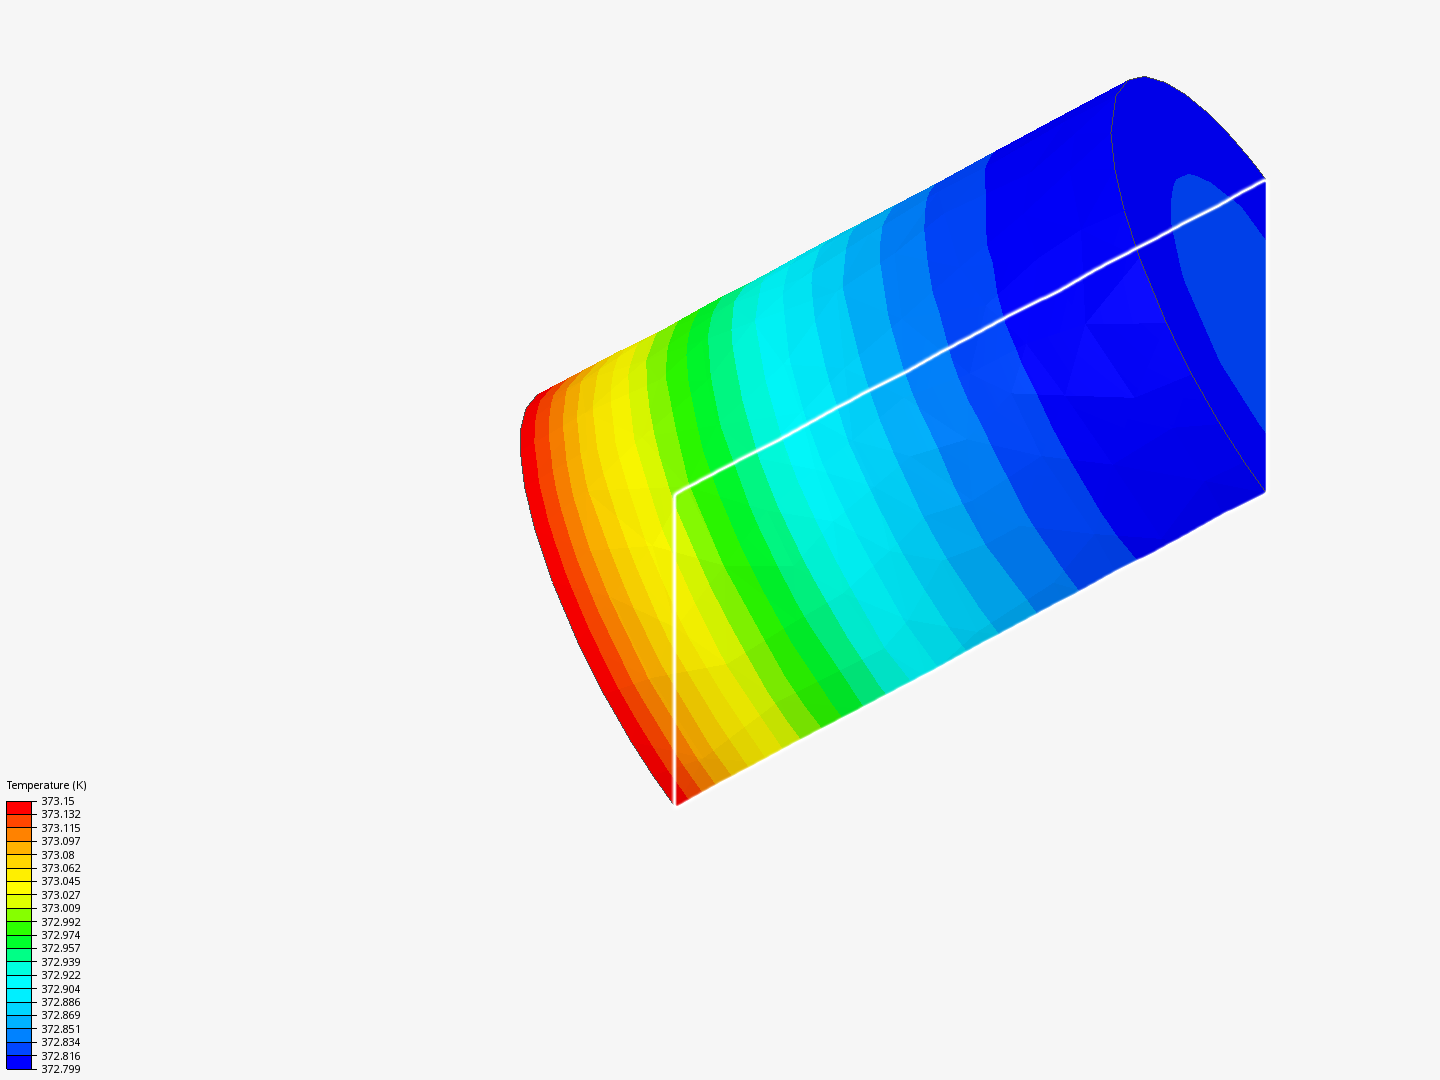 thermal analysis of zylinder image